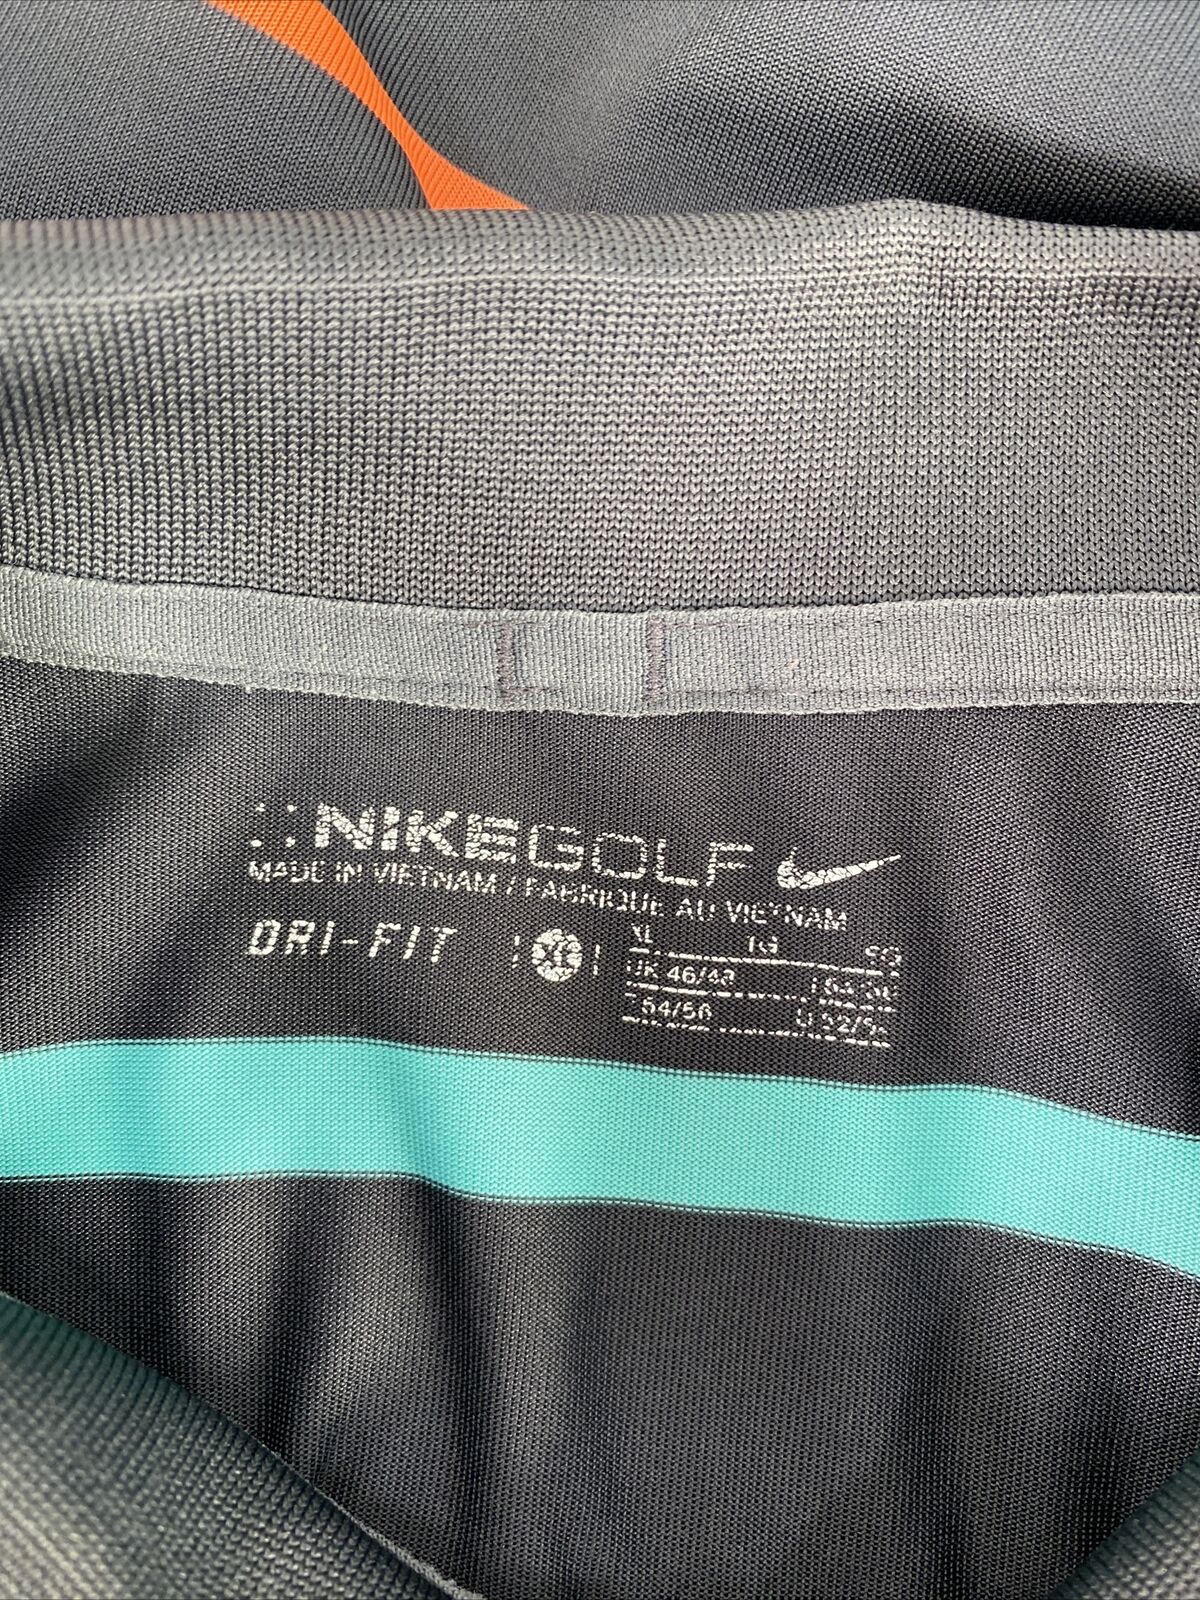 Nike Men's Gray Striped Short Sleeve Activewear Golf Polo - XL